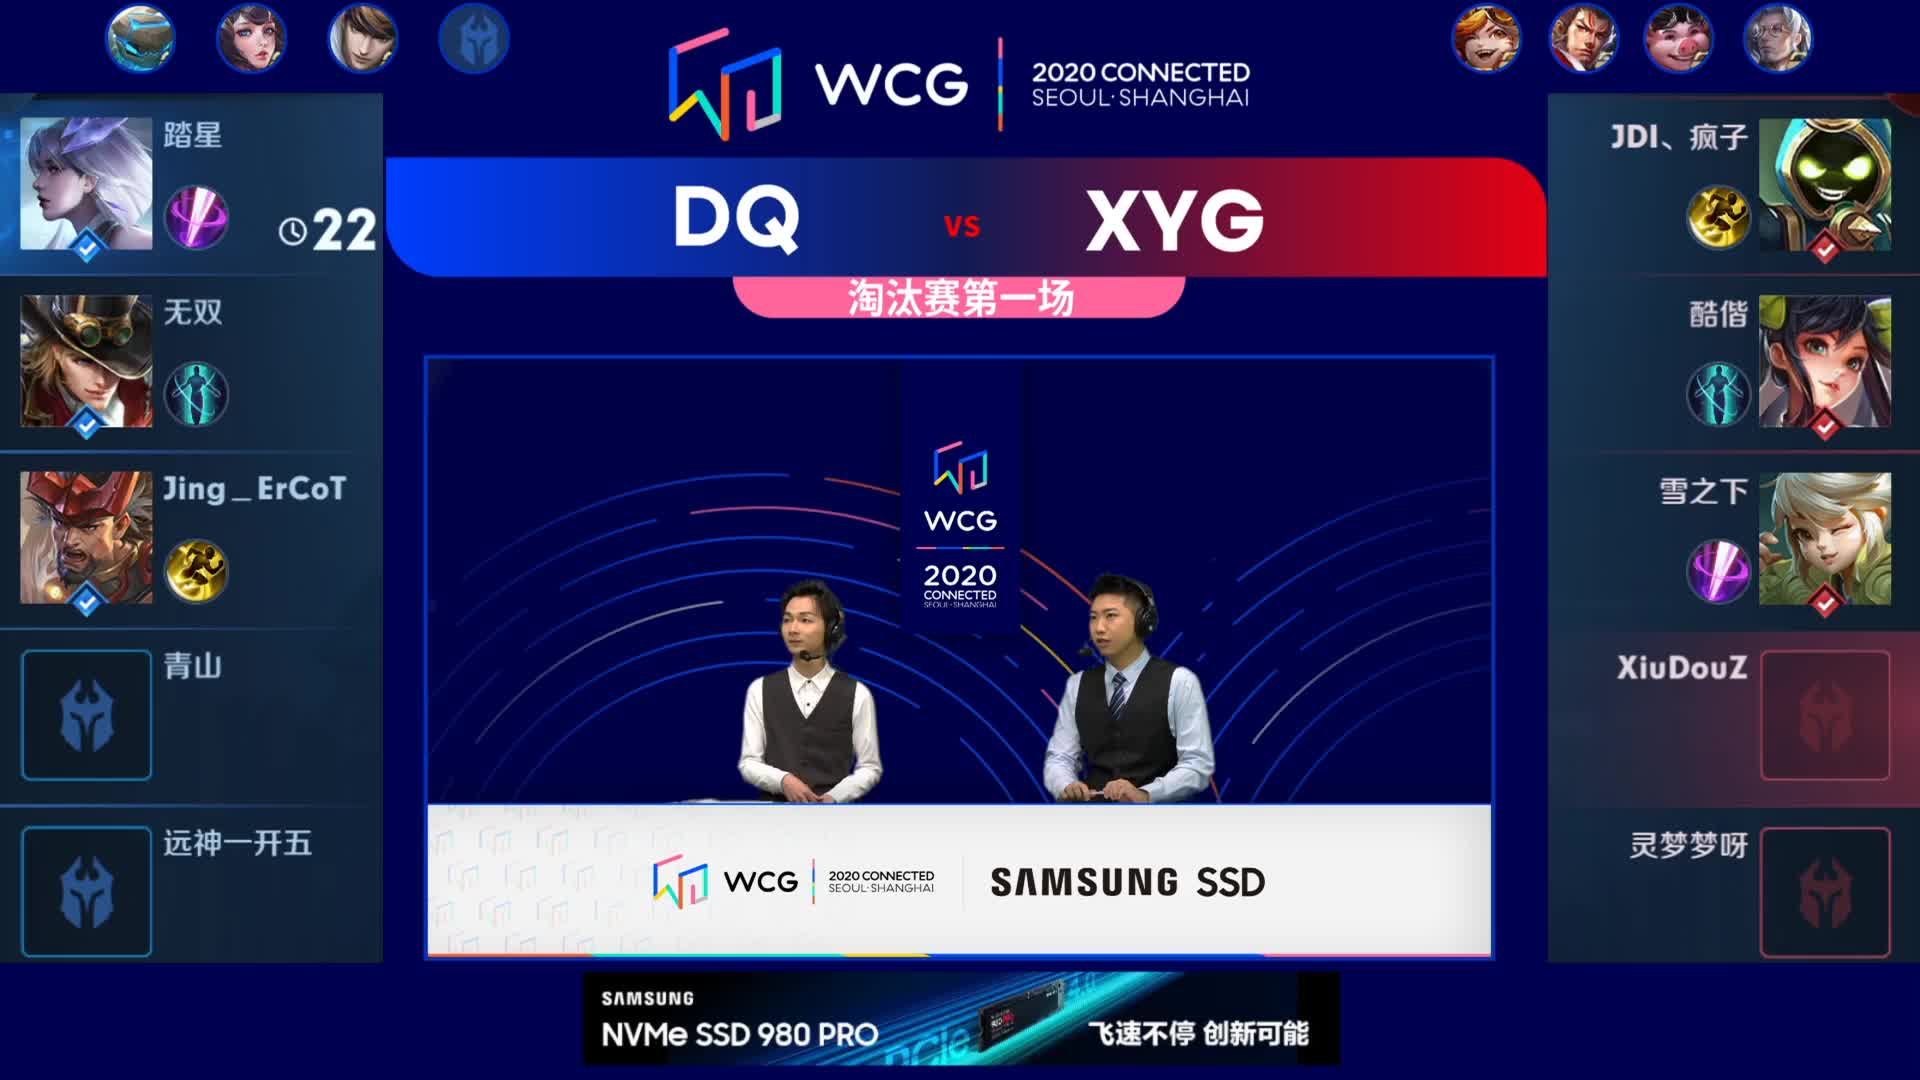  WCG王者荣耀项目 XYG晋级决赛